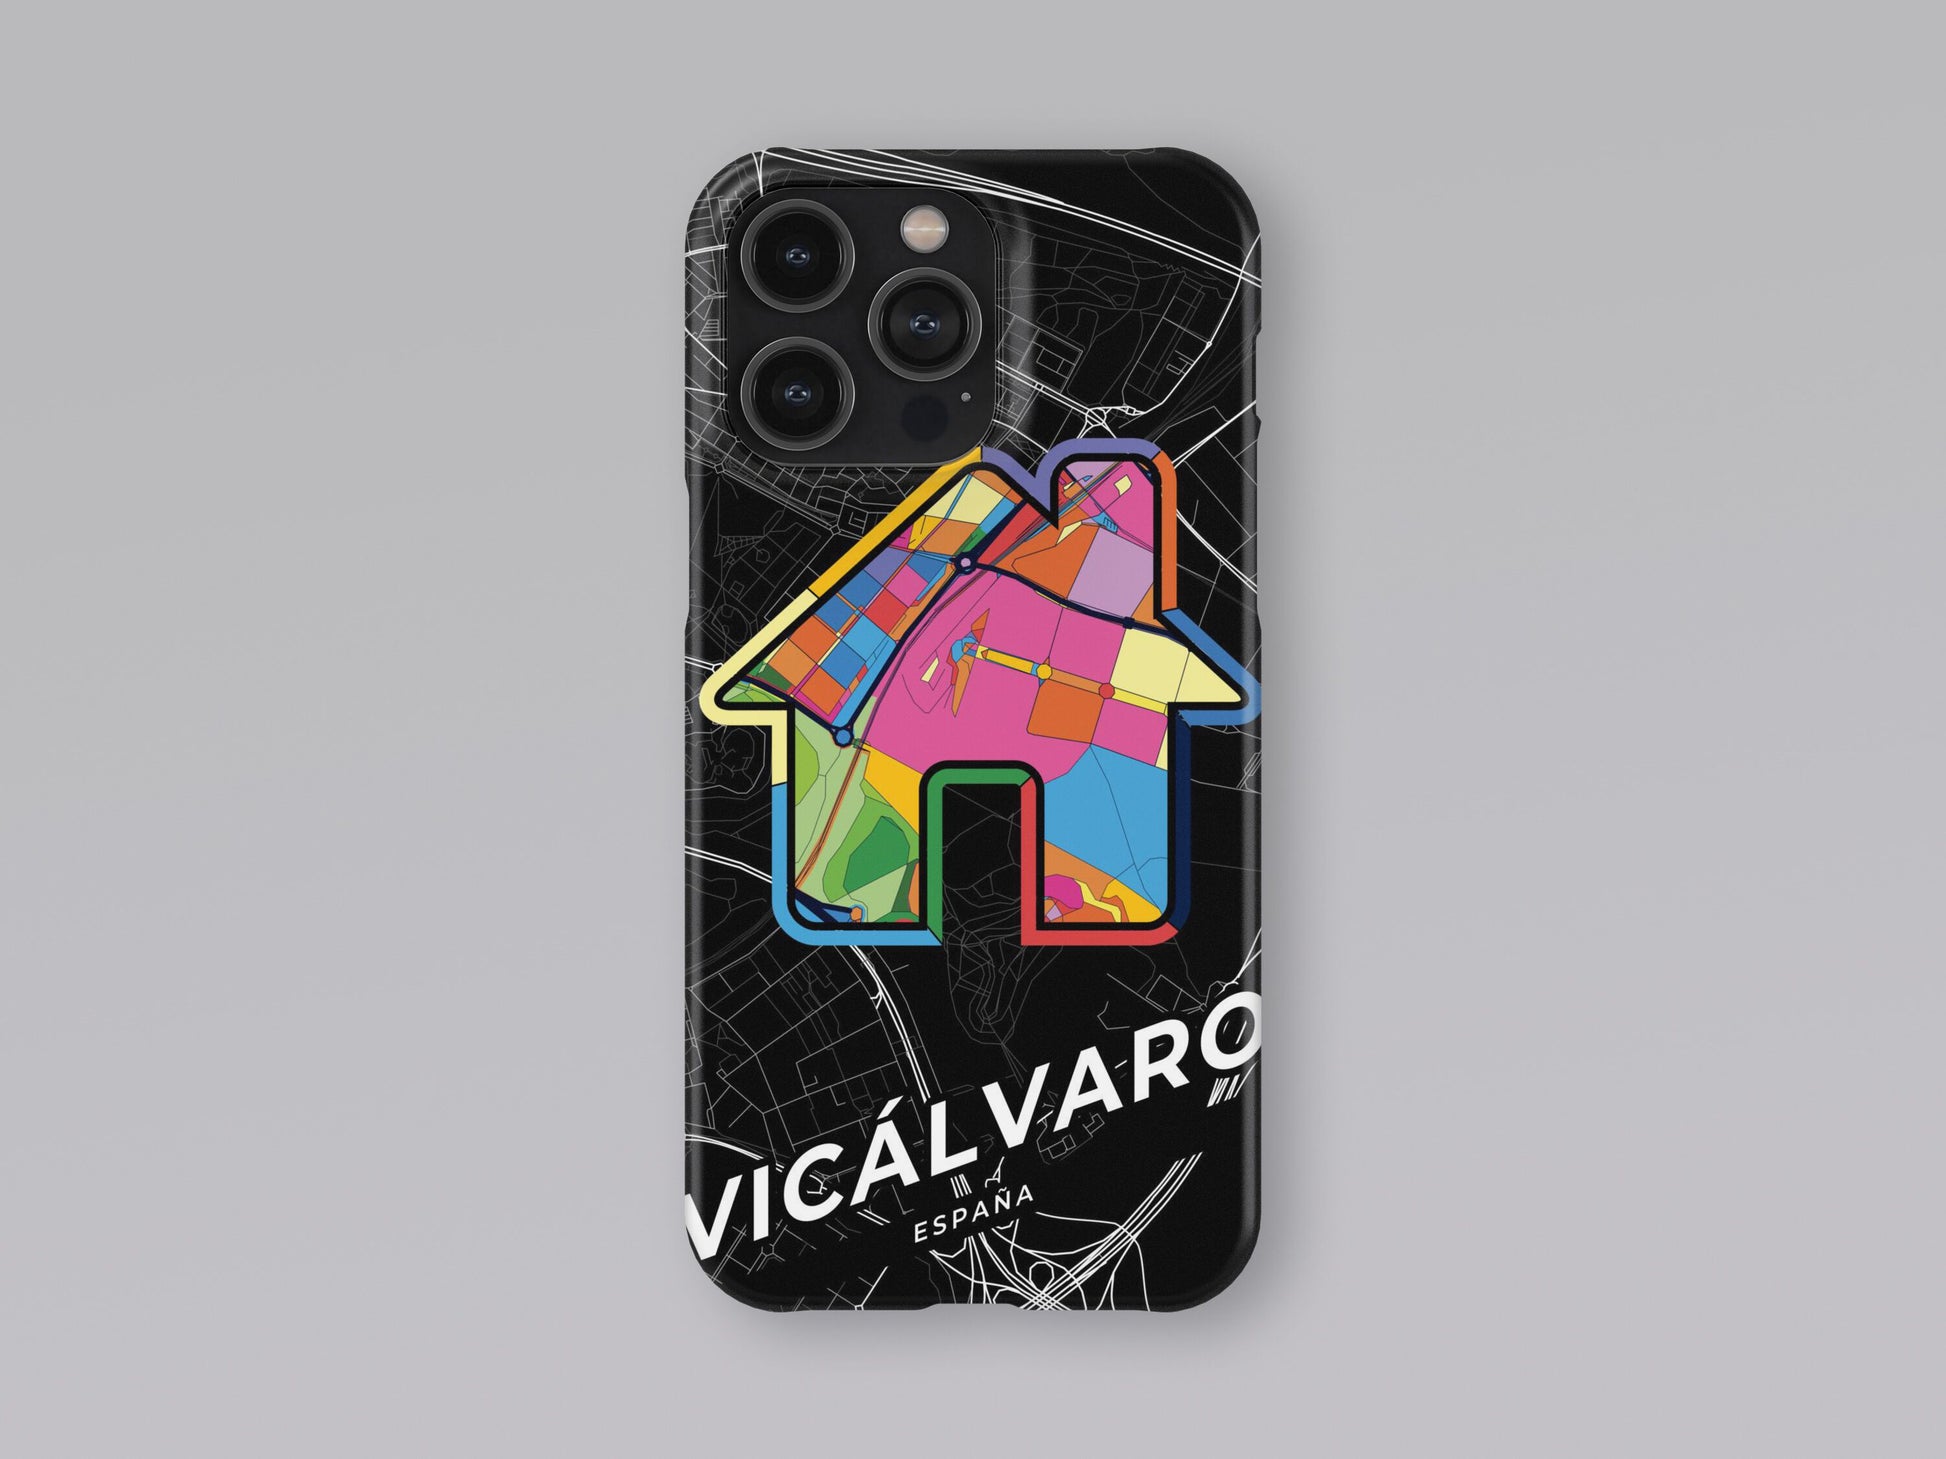 Vicálvaro Spain slim phone case with colorful icon 3